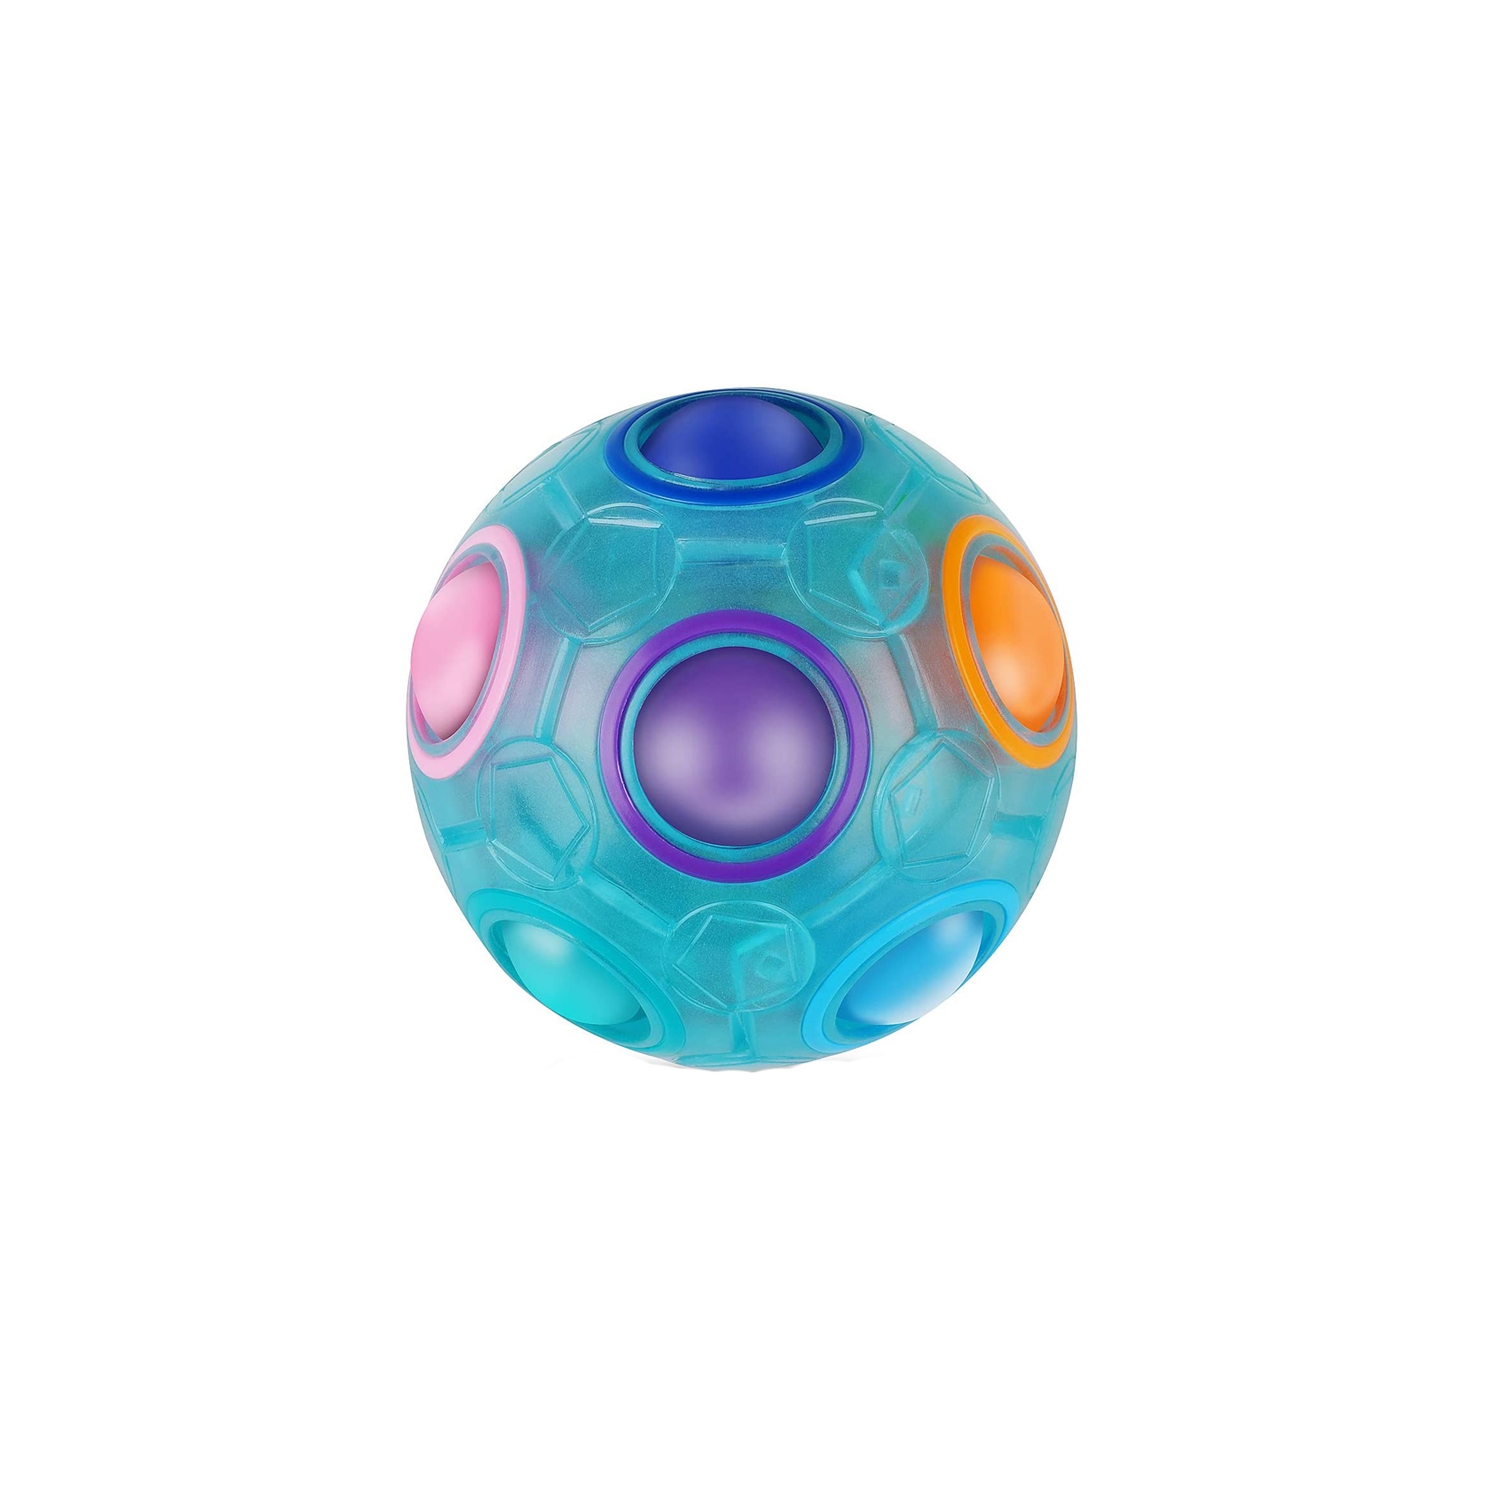 Magic Rainbow Puzzle Ball Pop Fidget Toy Stress Reliever - Blue